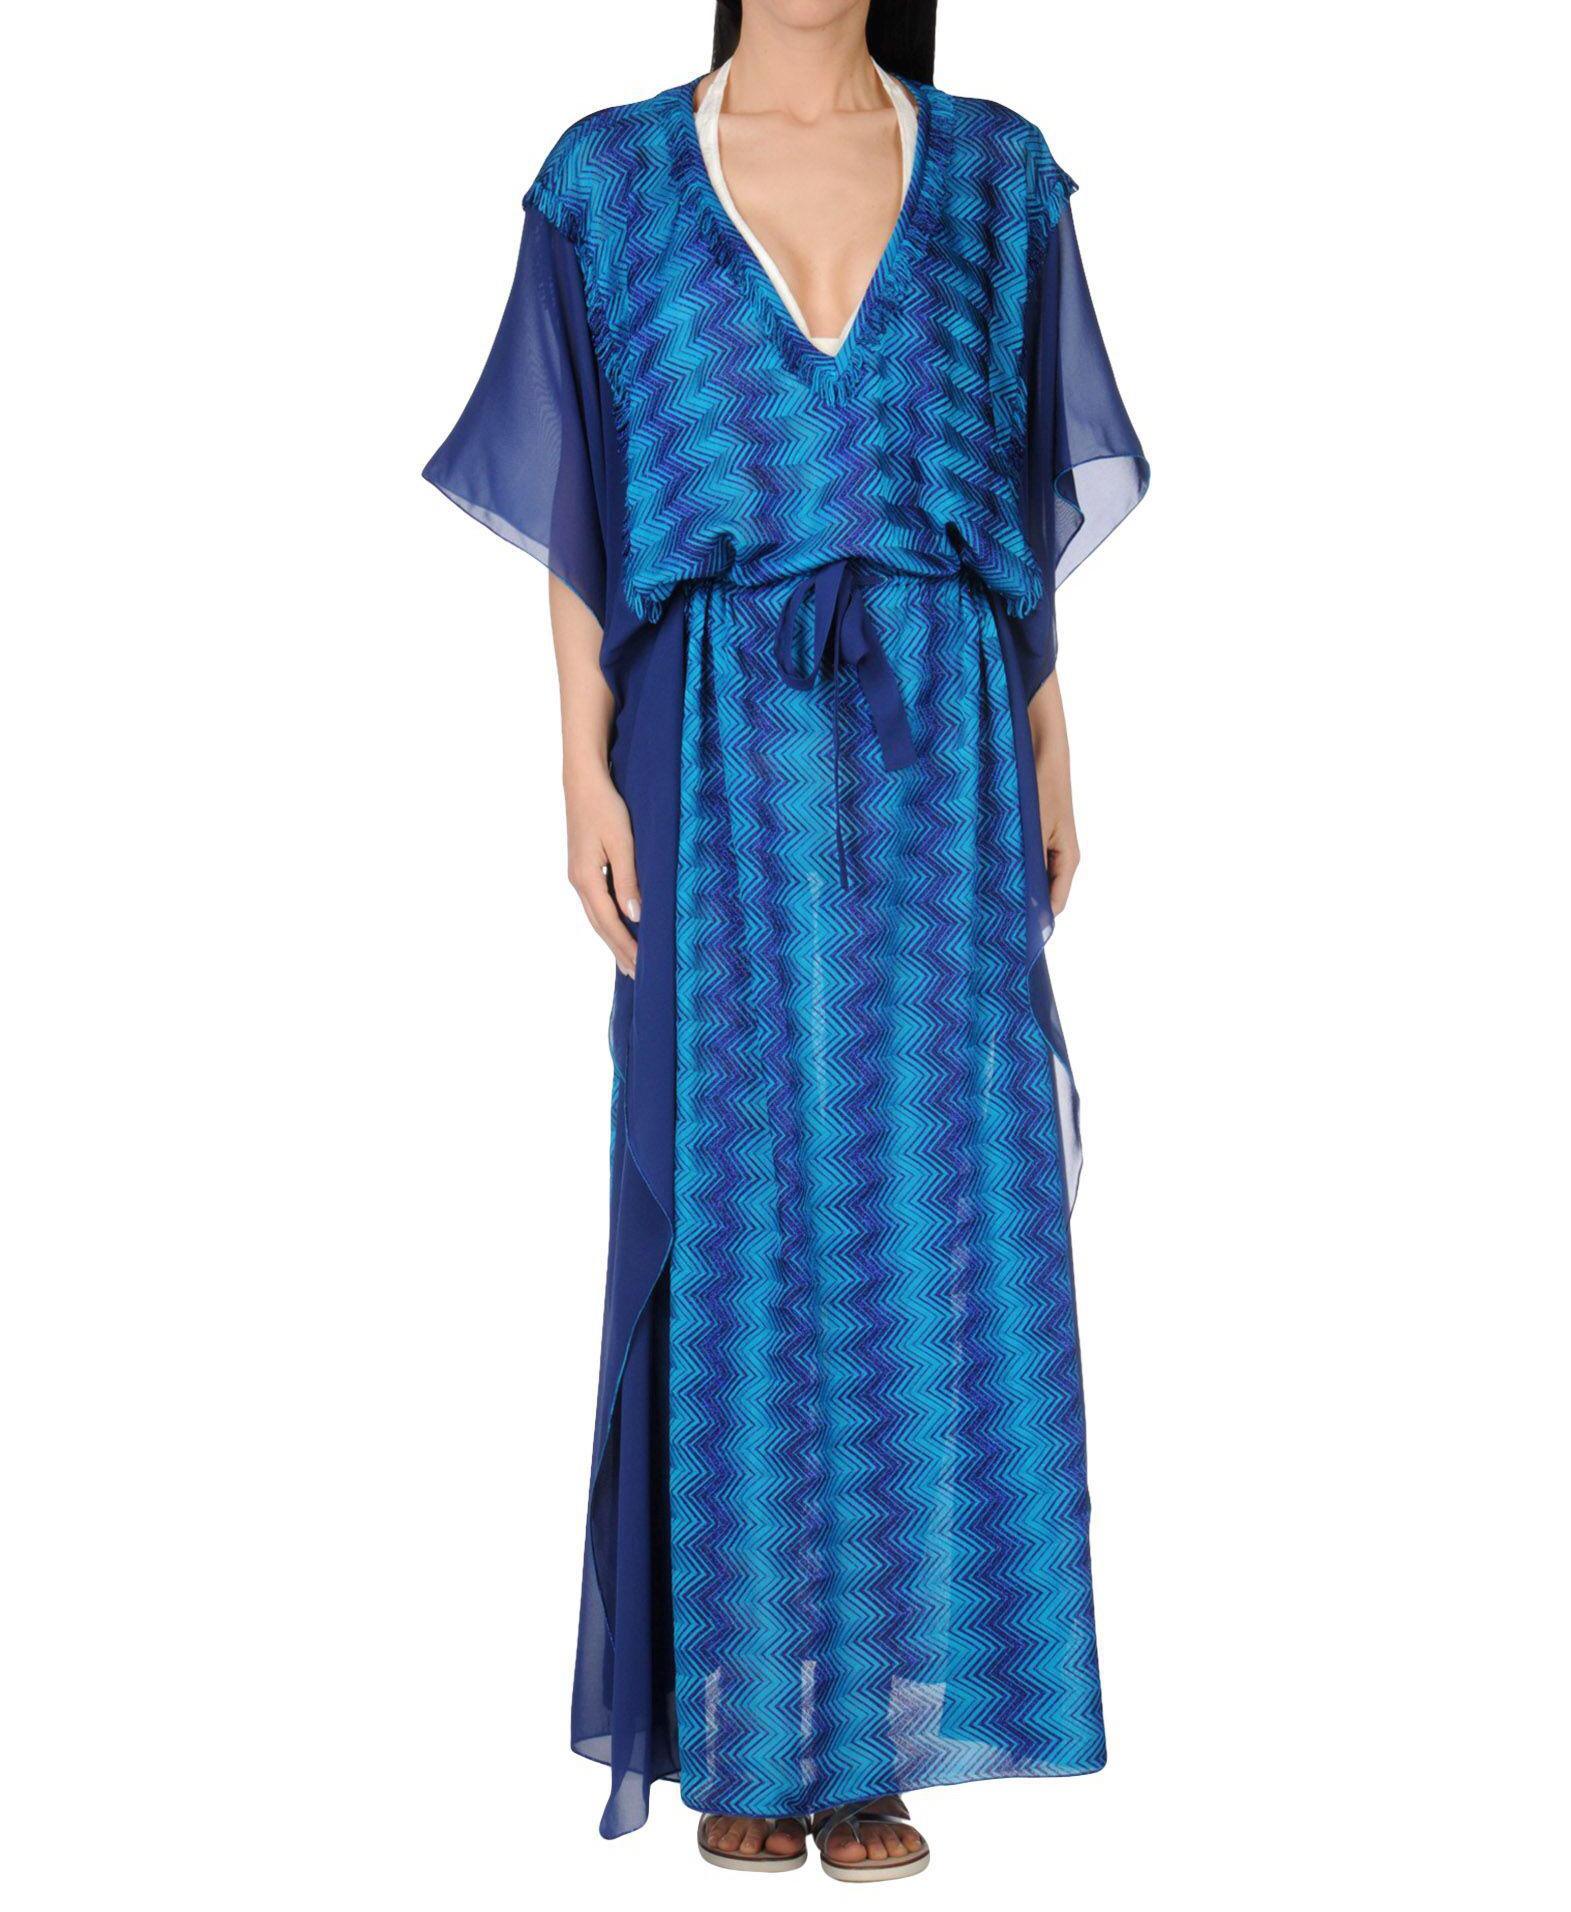 blue chevron maxi dress